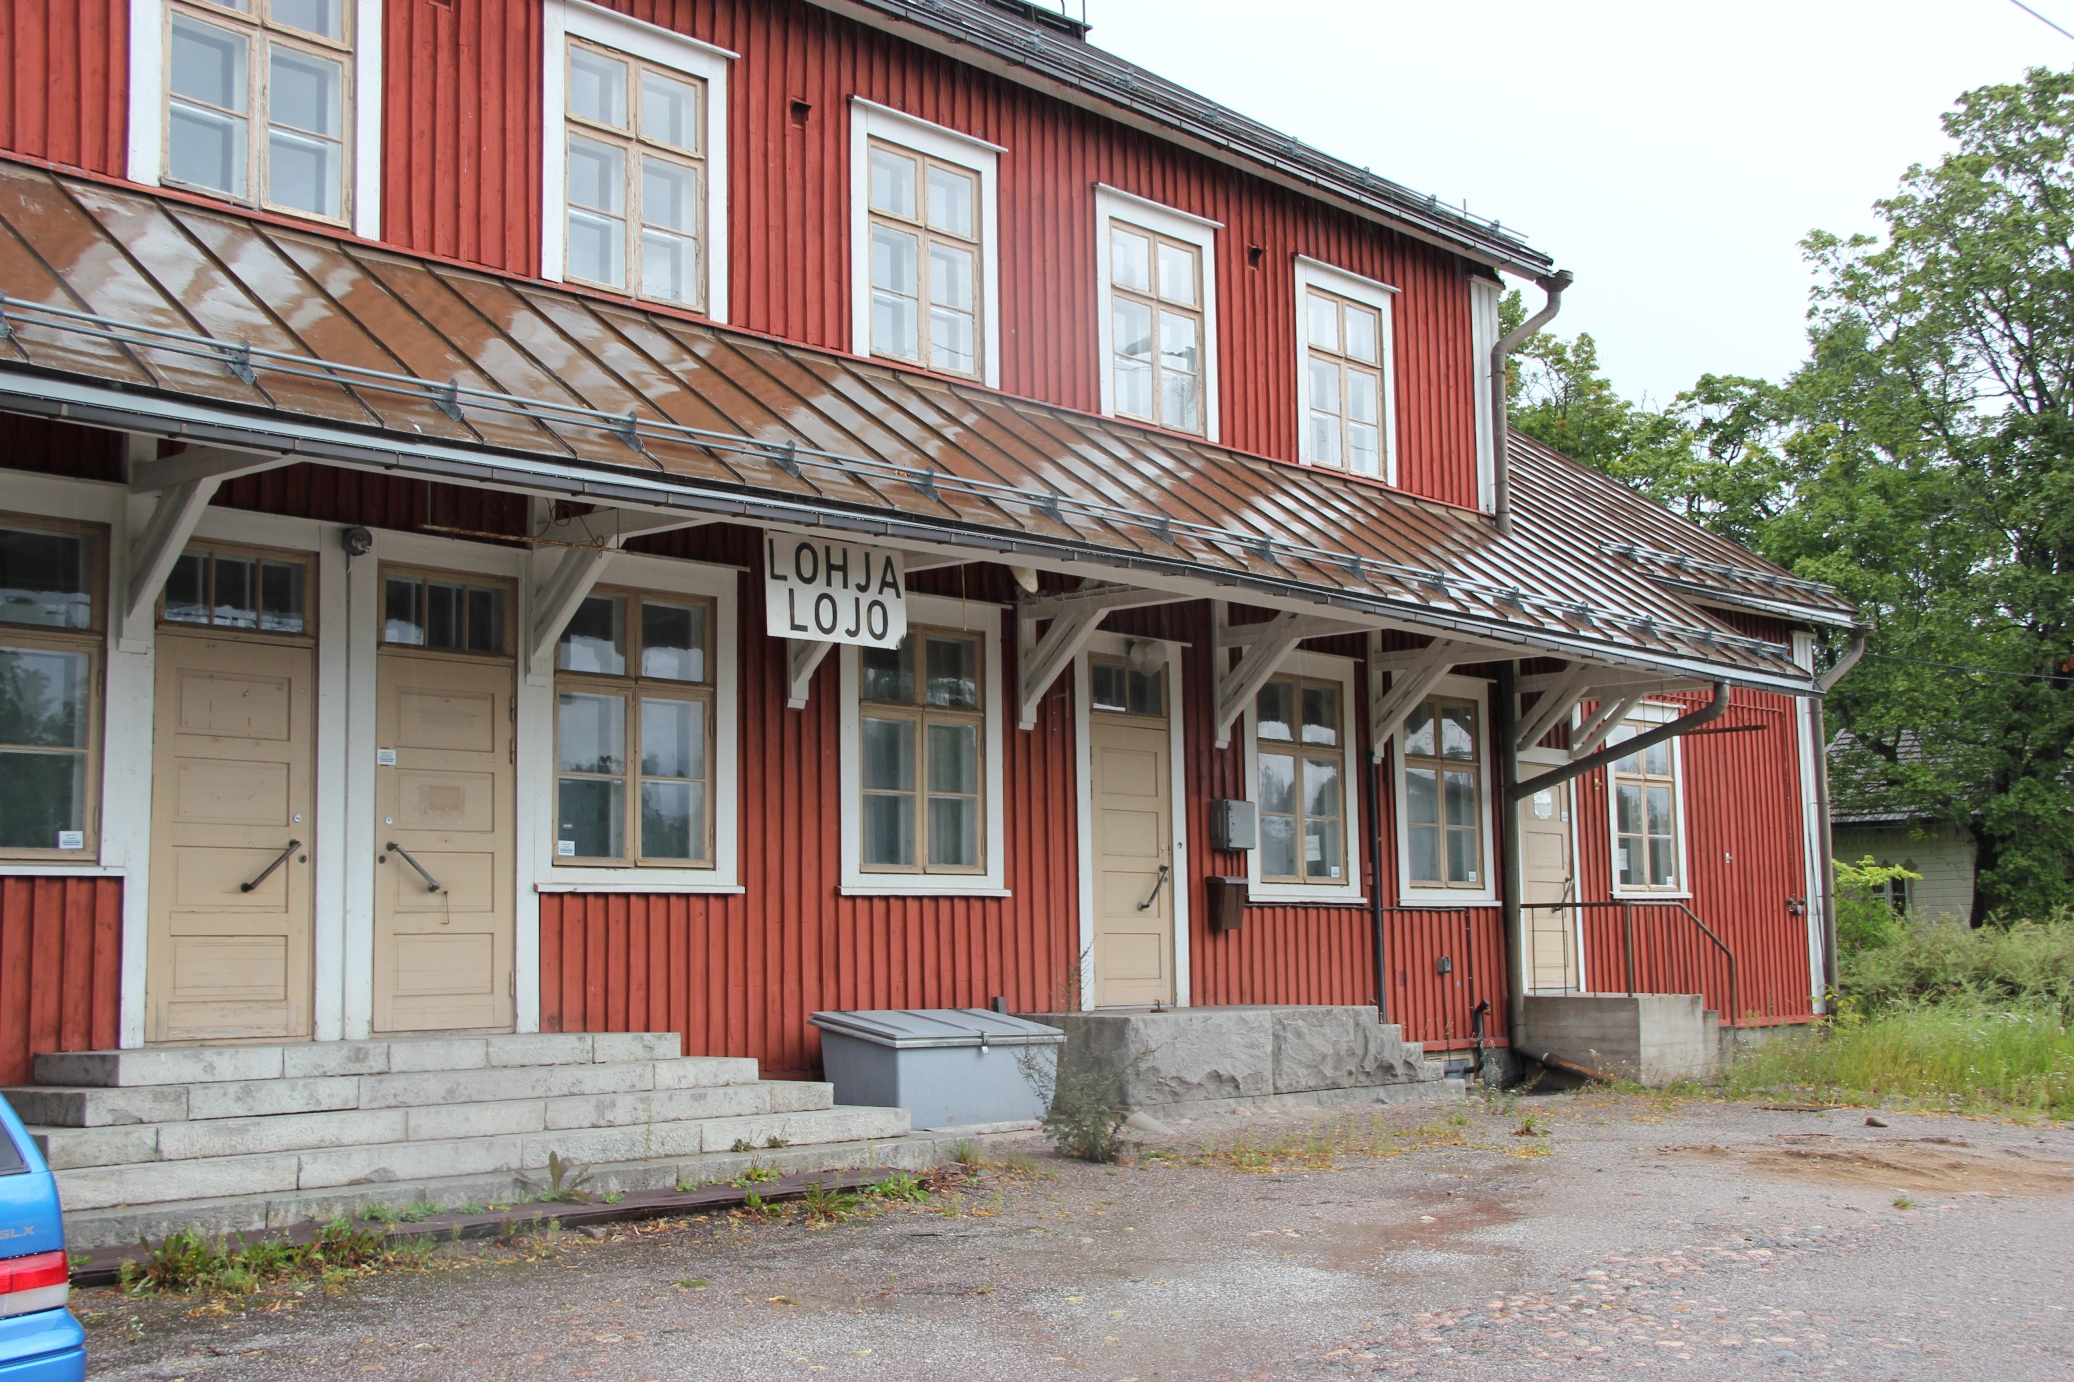 File:Lohjan rautatieasema  - Wikimedia Commons